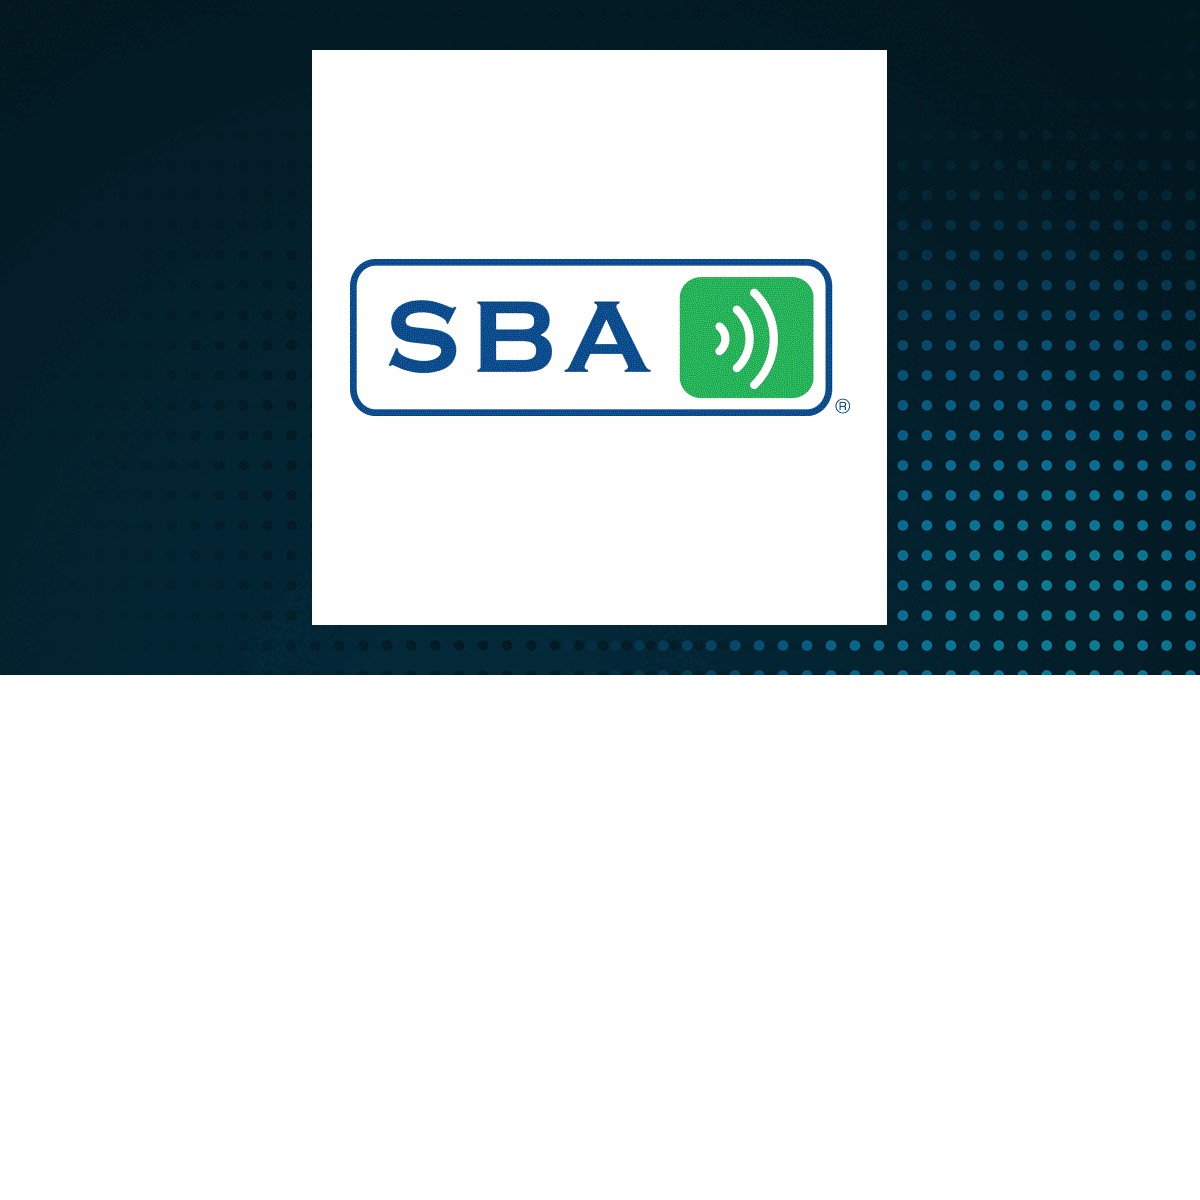 SBA Communications logo with Finance background